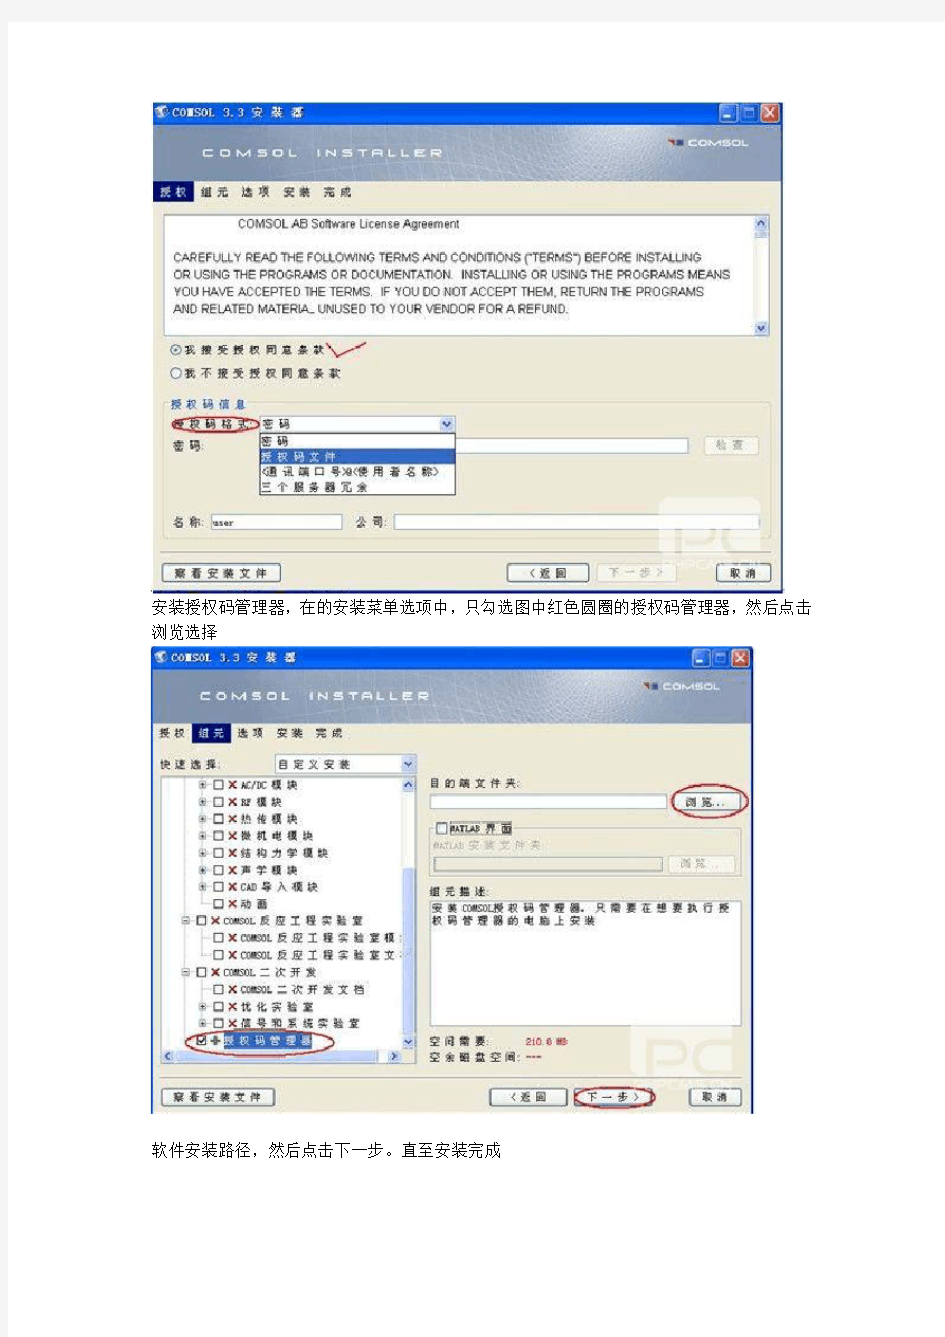 COMSOL Multiphysics 中文使用手册3Windows网络版安装